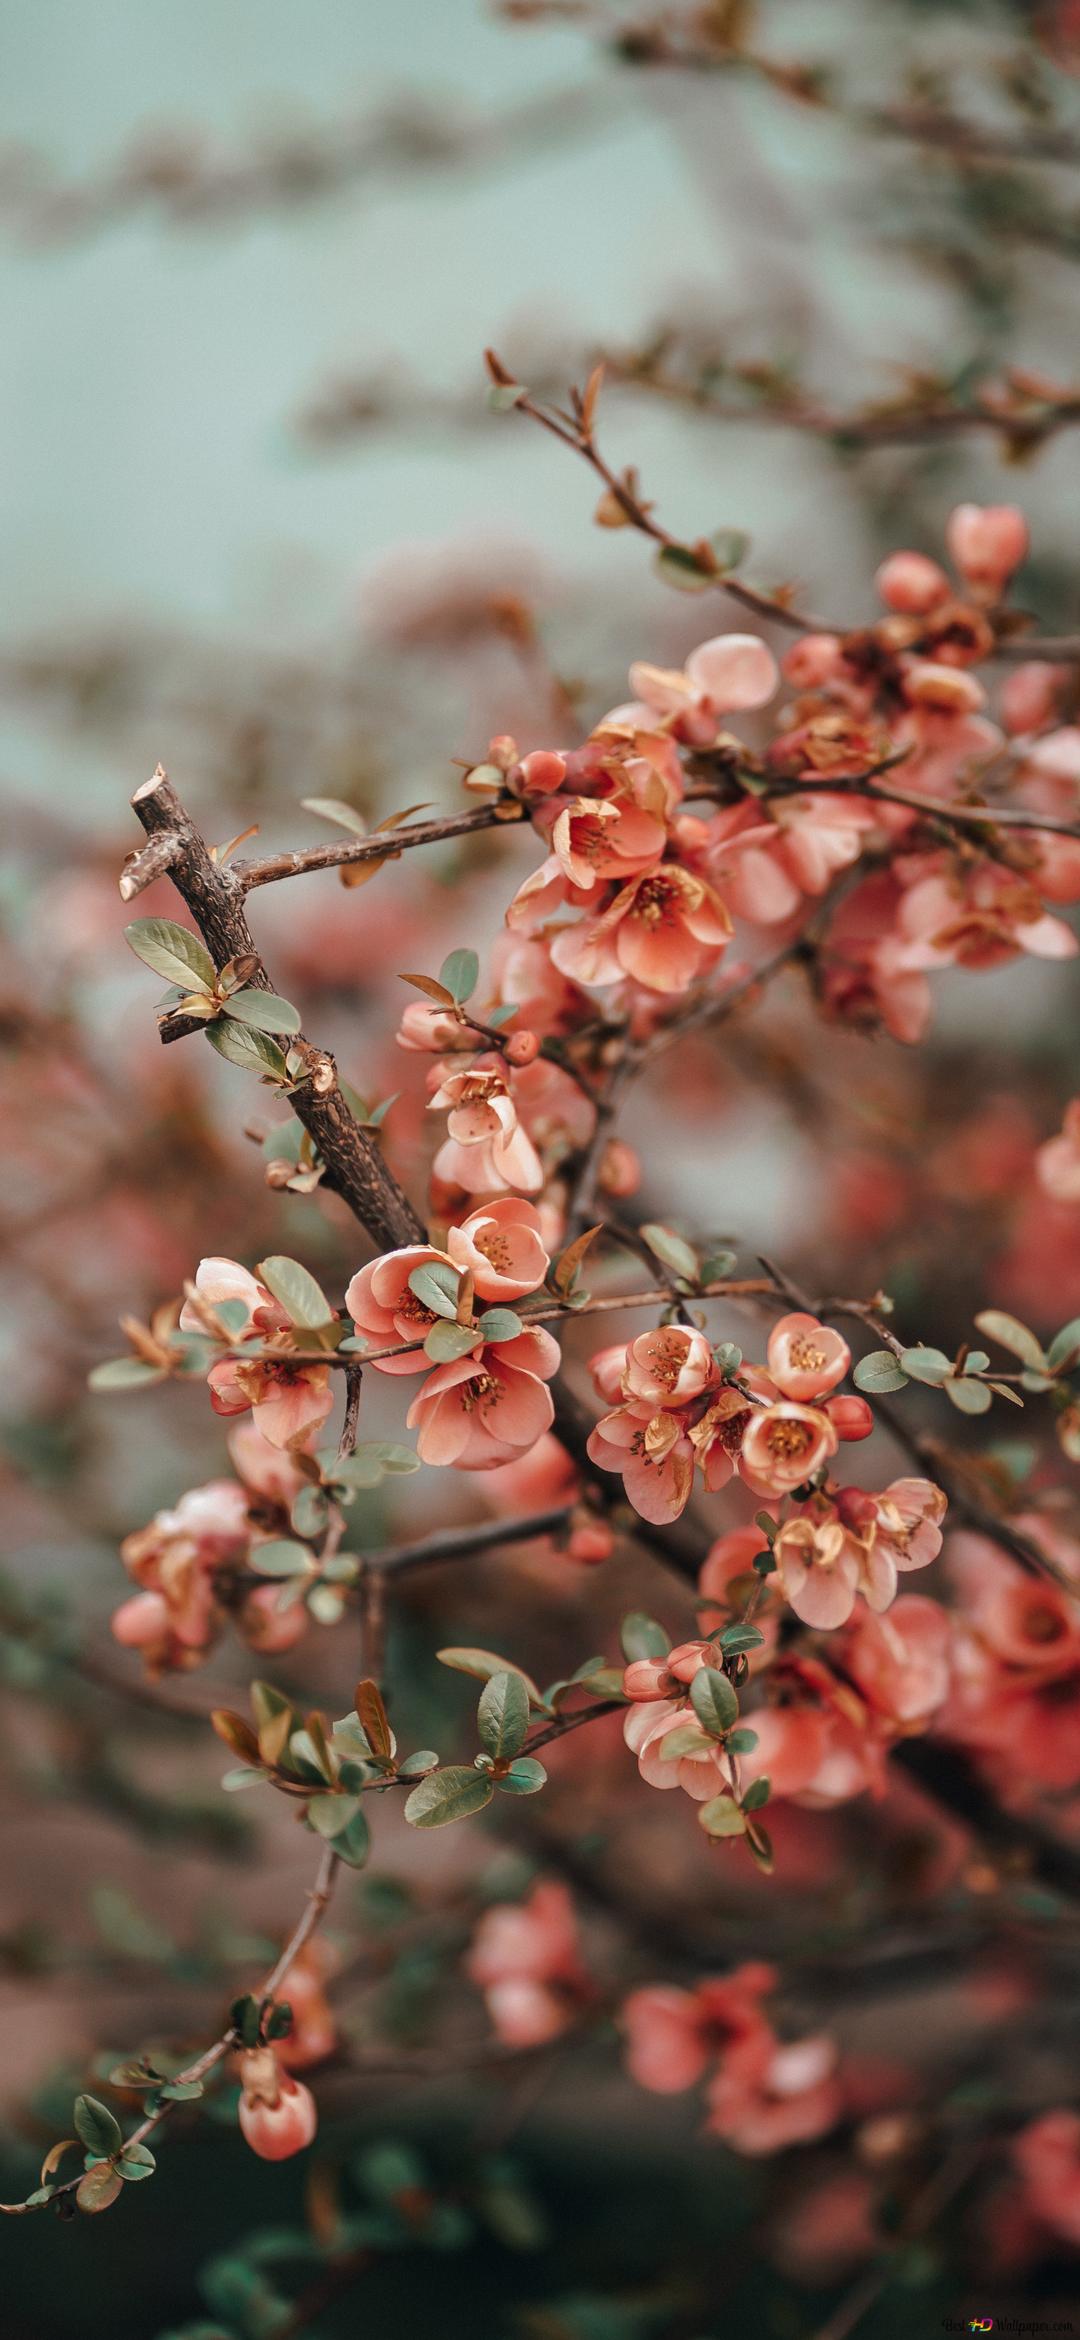 Spring's blossom 2K wallpaper download